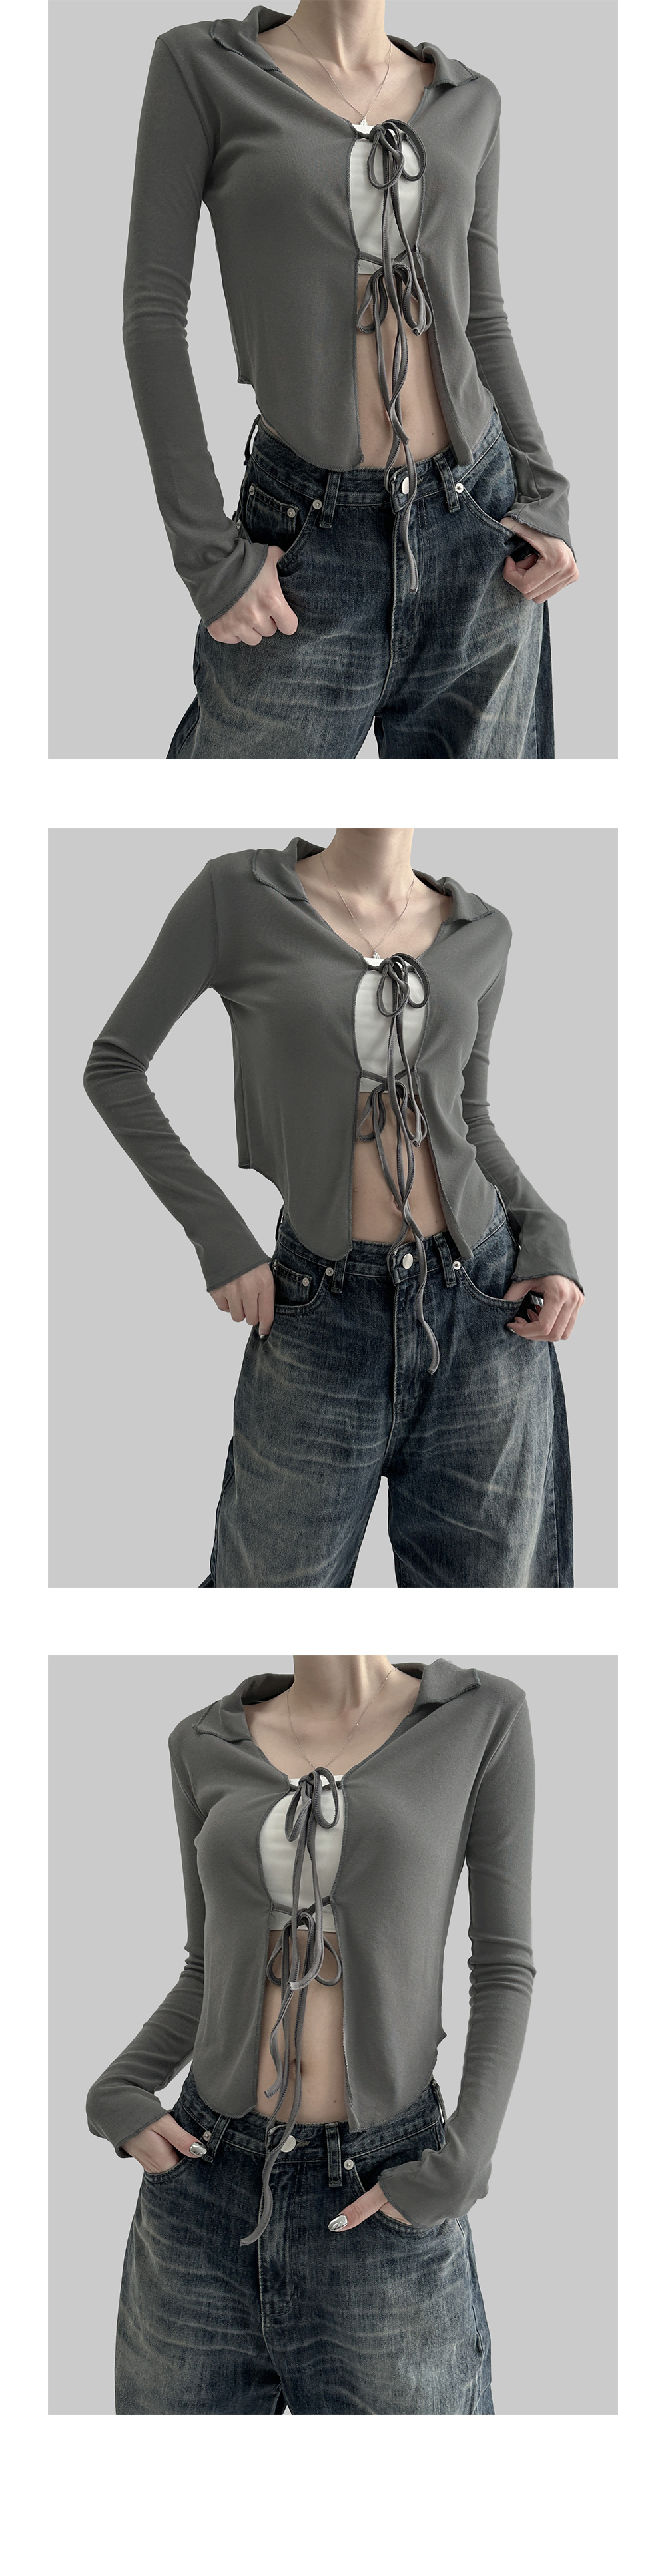 suspenders skirt/pants model image-S2L13